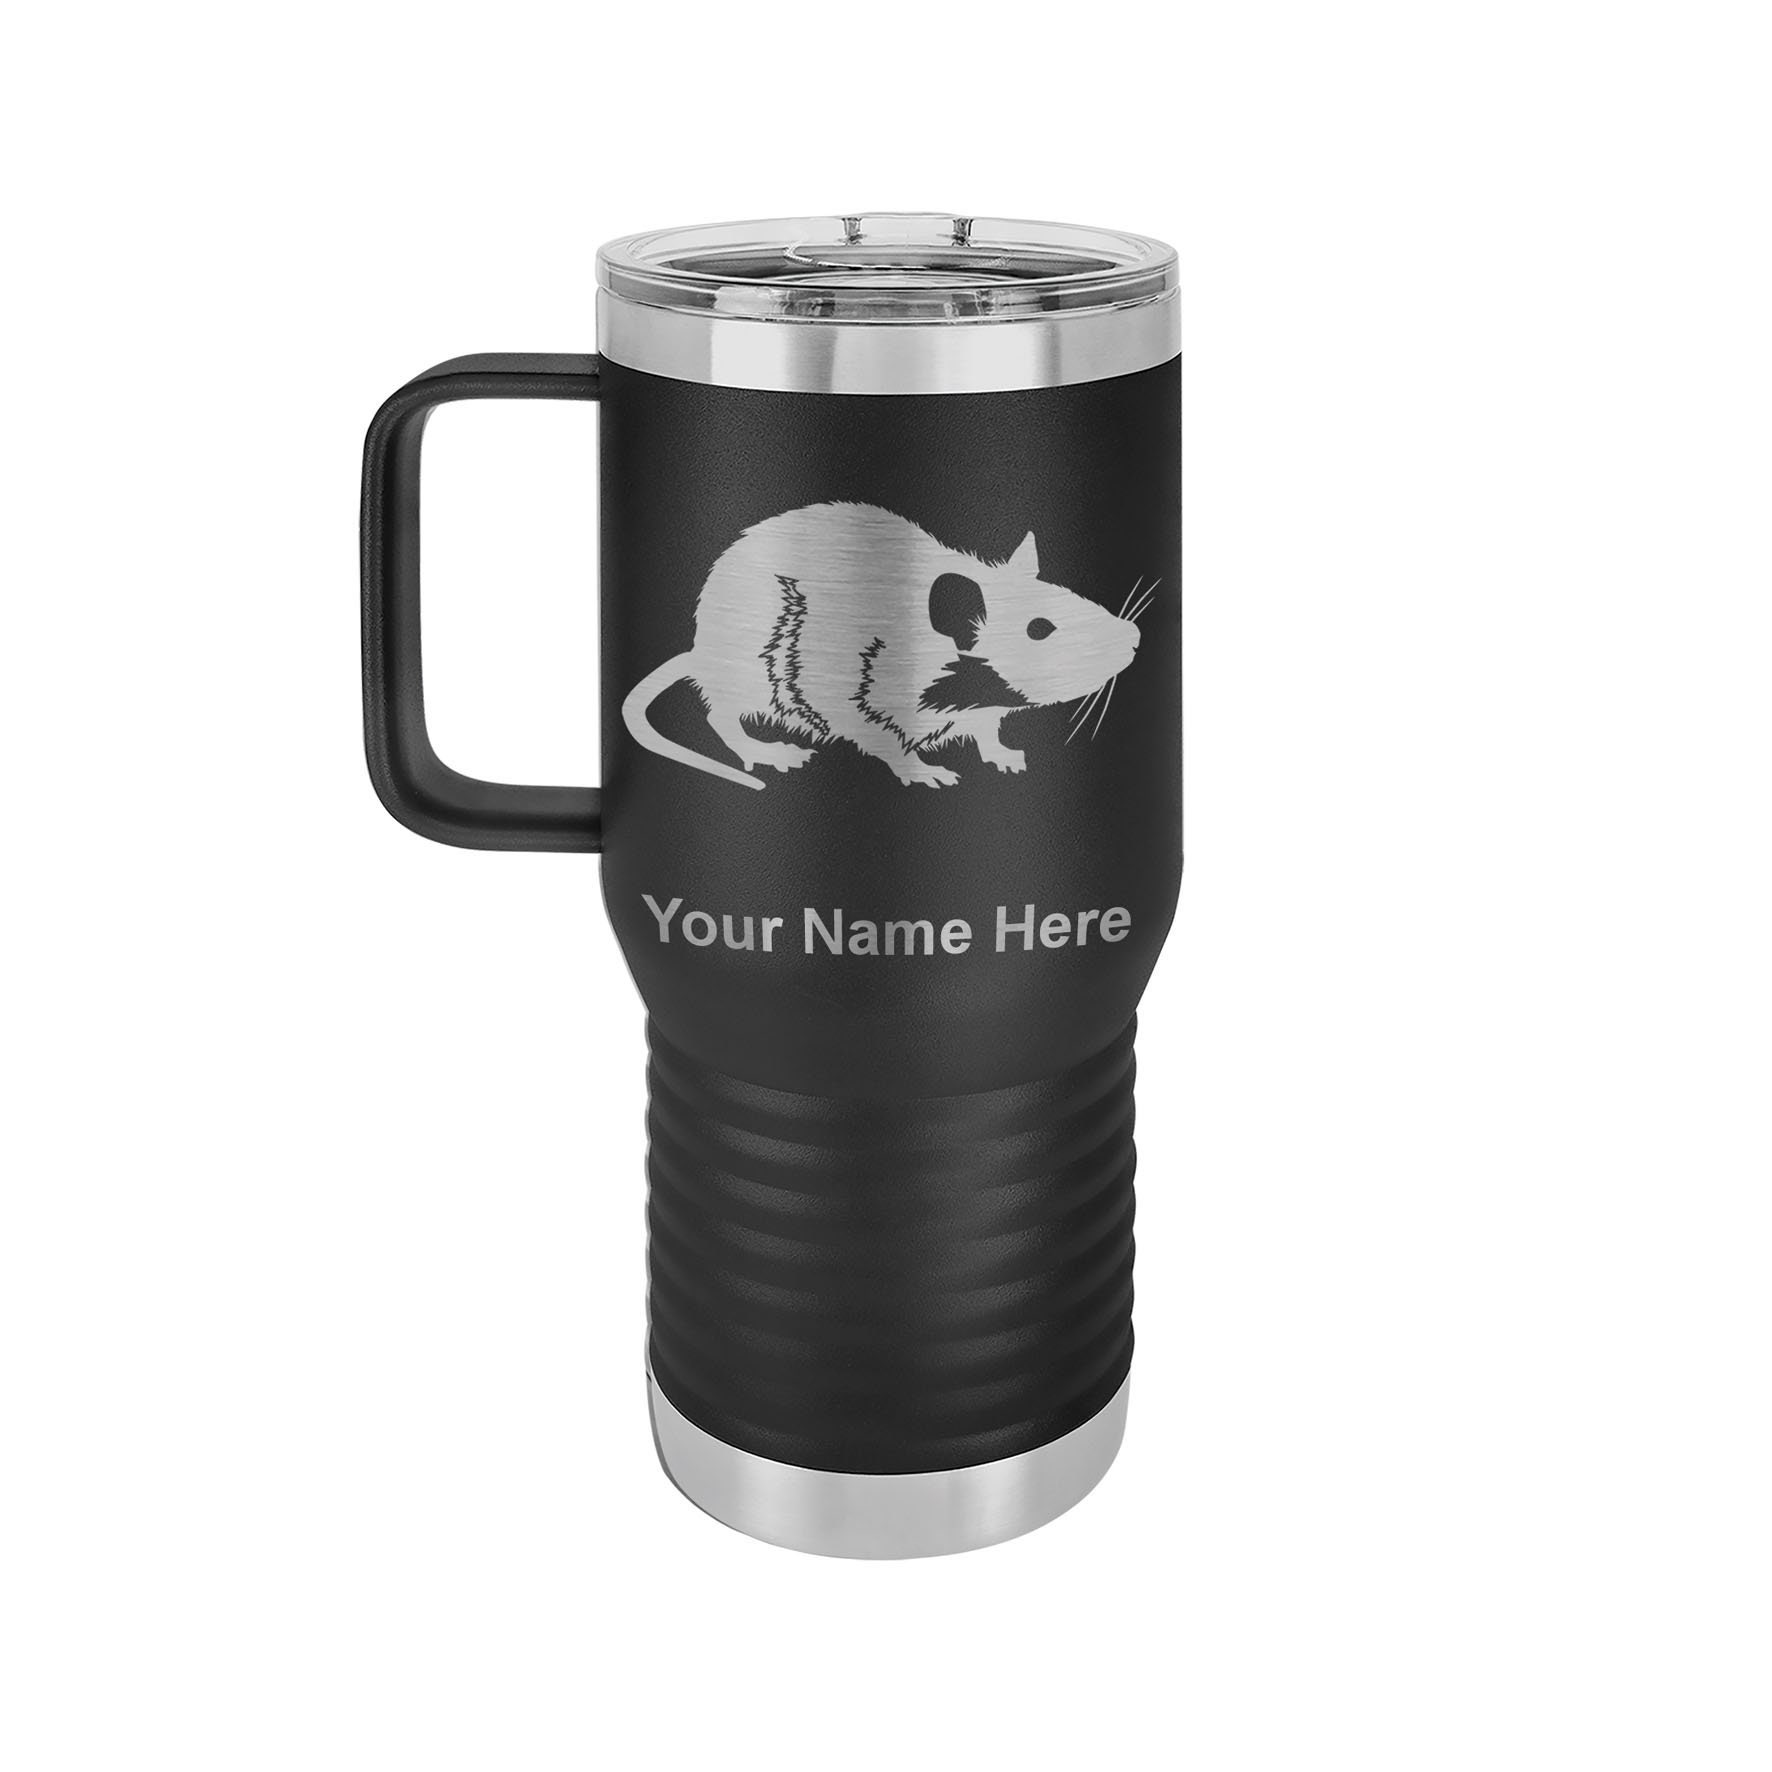 Lasergram 20oz Vacuum Insulated Coffee Mug With Handle, Rat